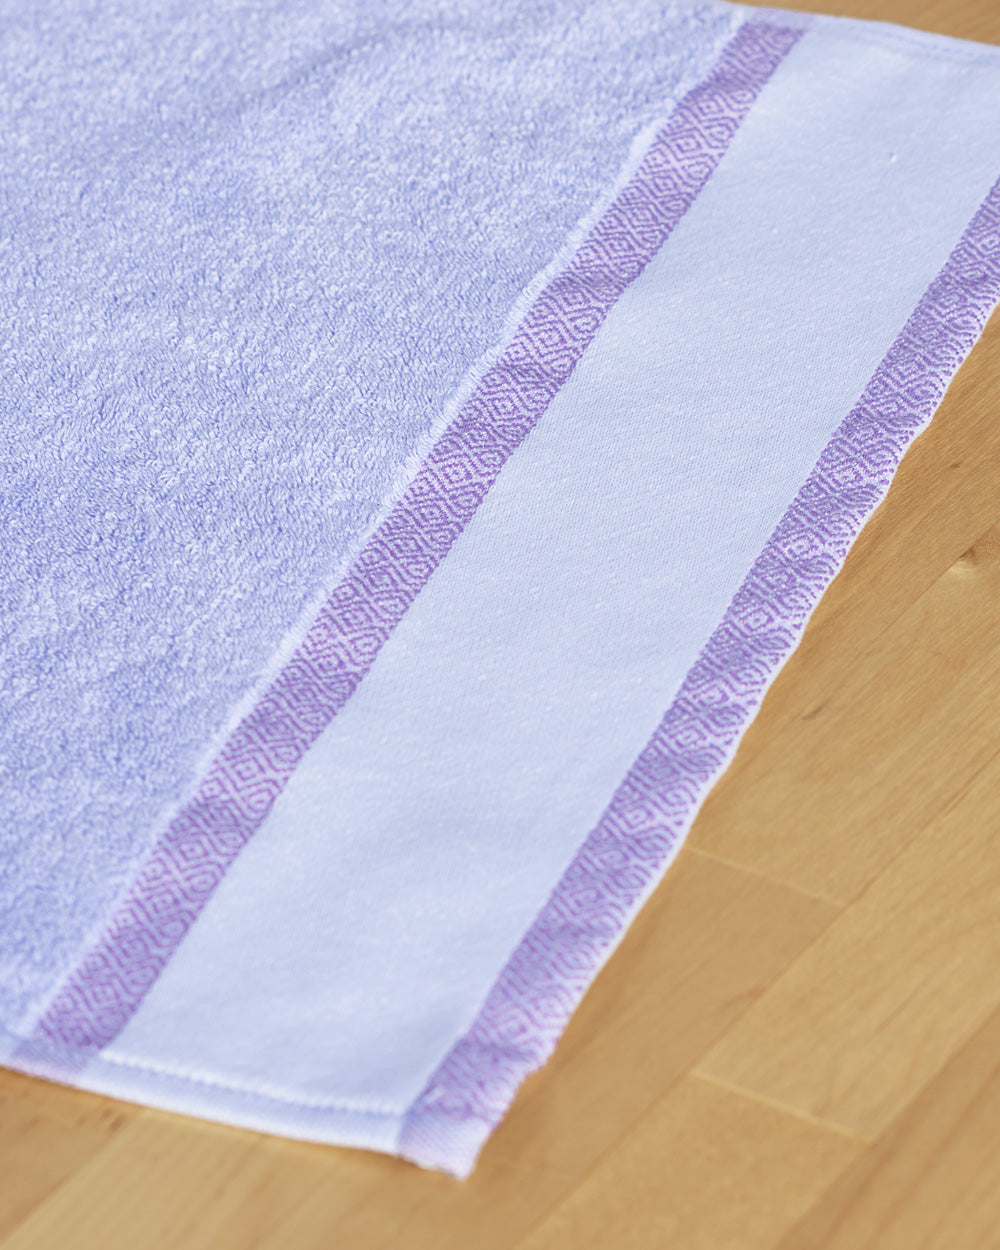 Wild foxtail Purple Hand Towel (SIZE 16"X 32")